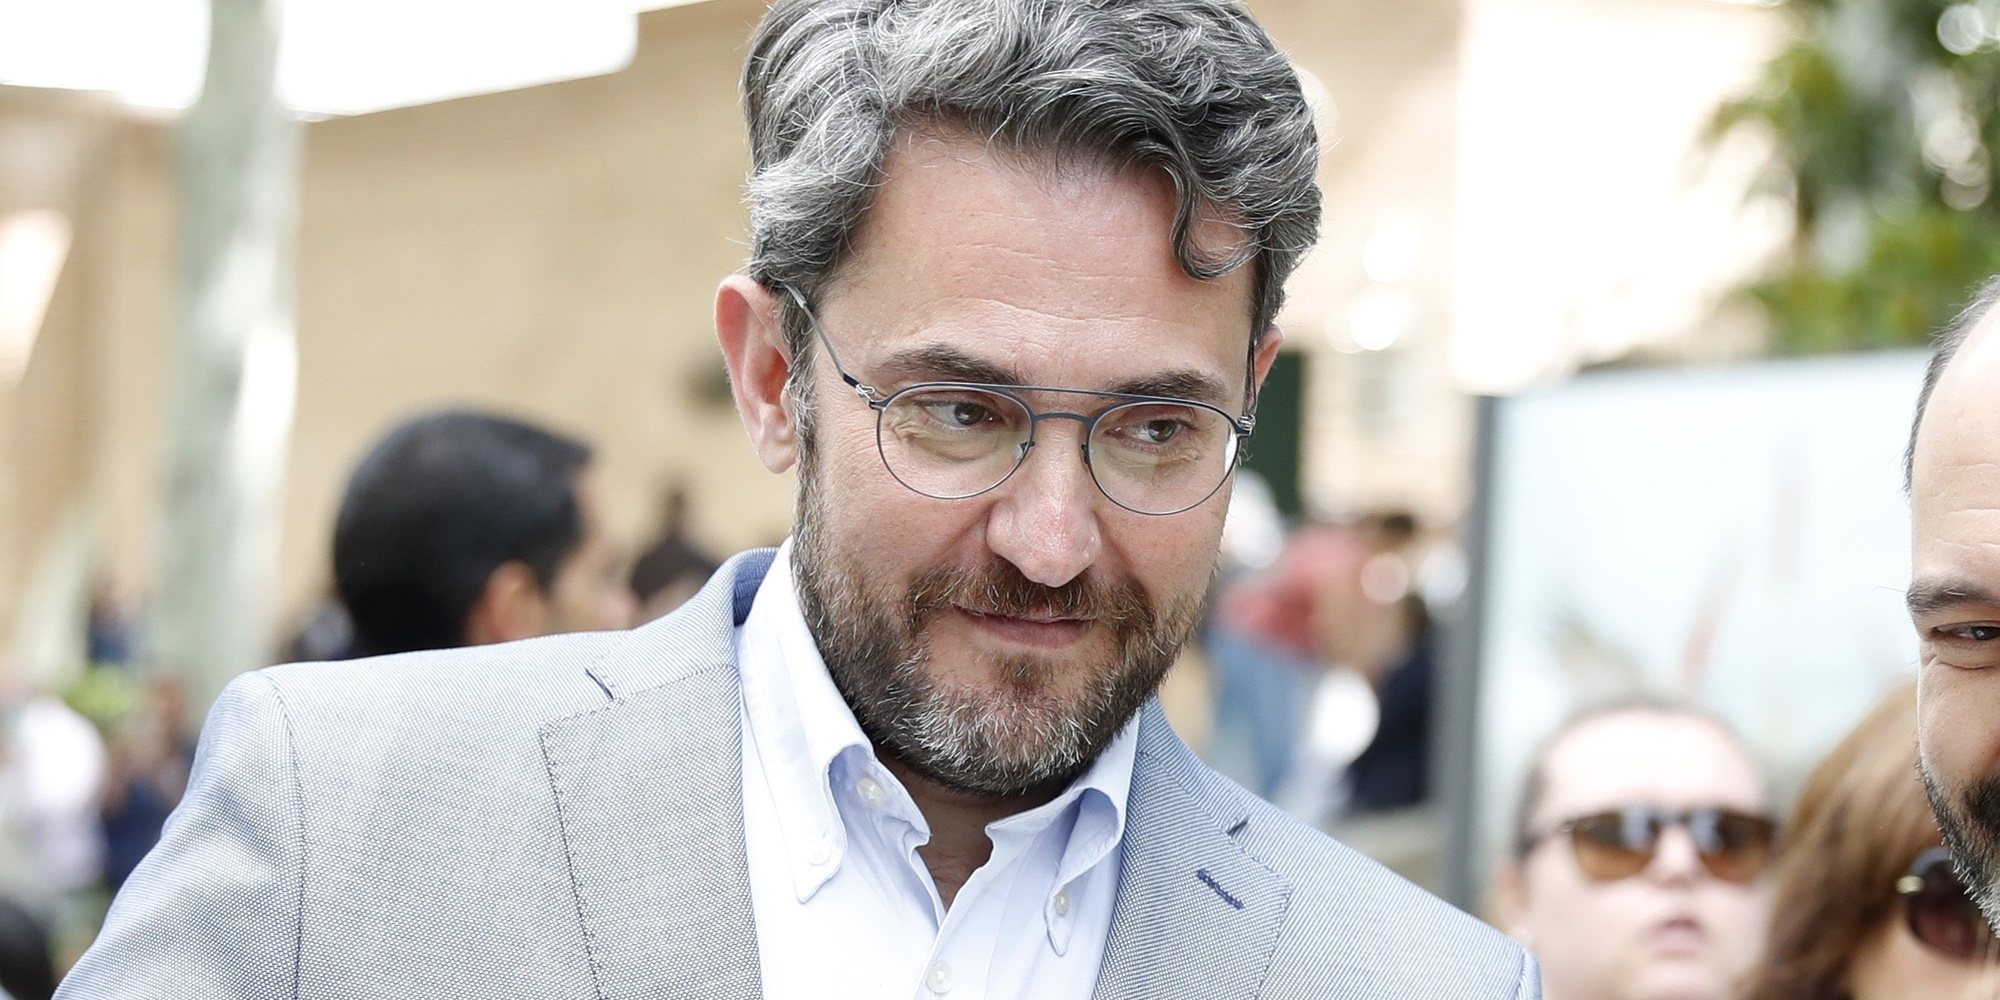 El Ministro Màxim Huerta fue casero de Iñaki López, presentador de La Sexta